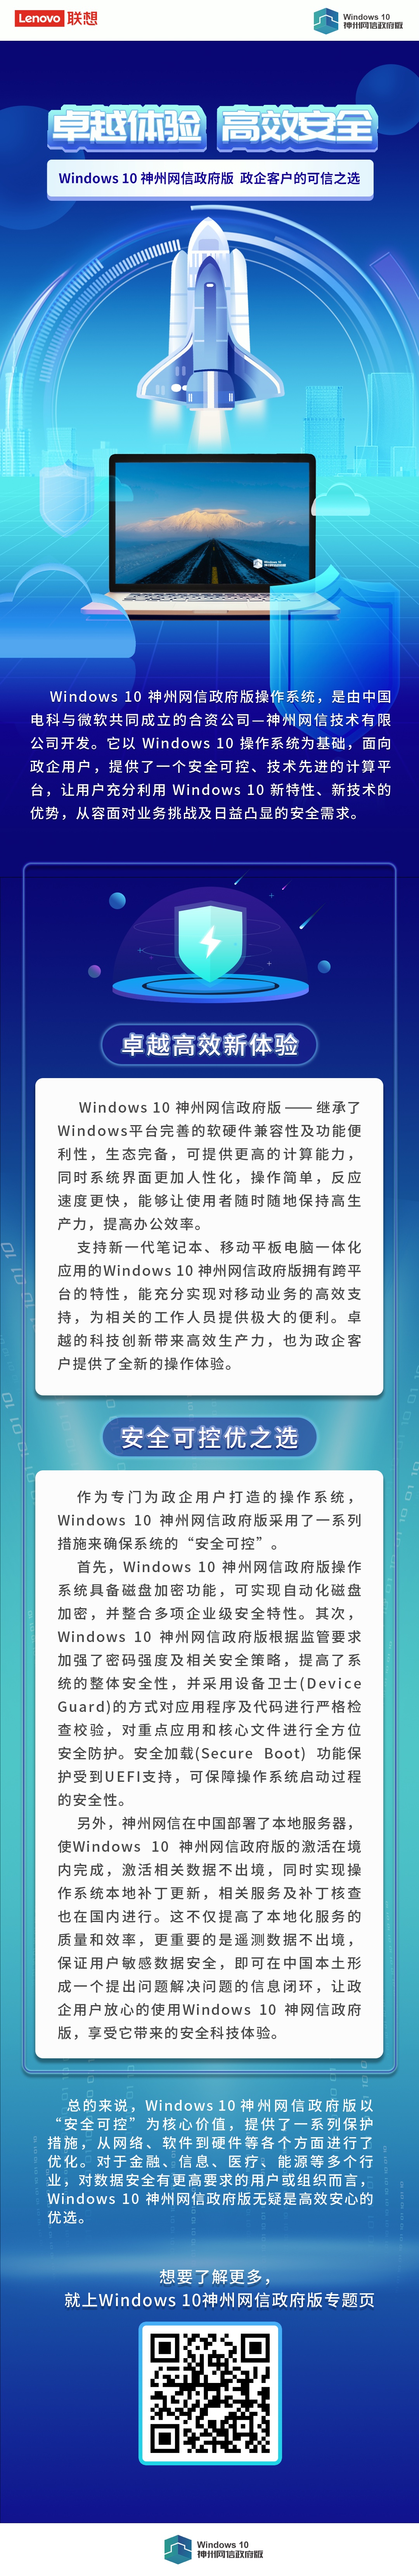 Windows 10 神州网信政府版 政企客户的可信之选